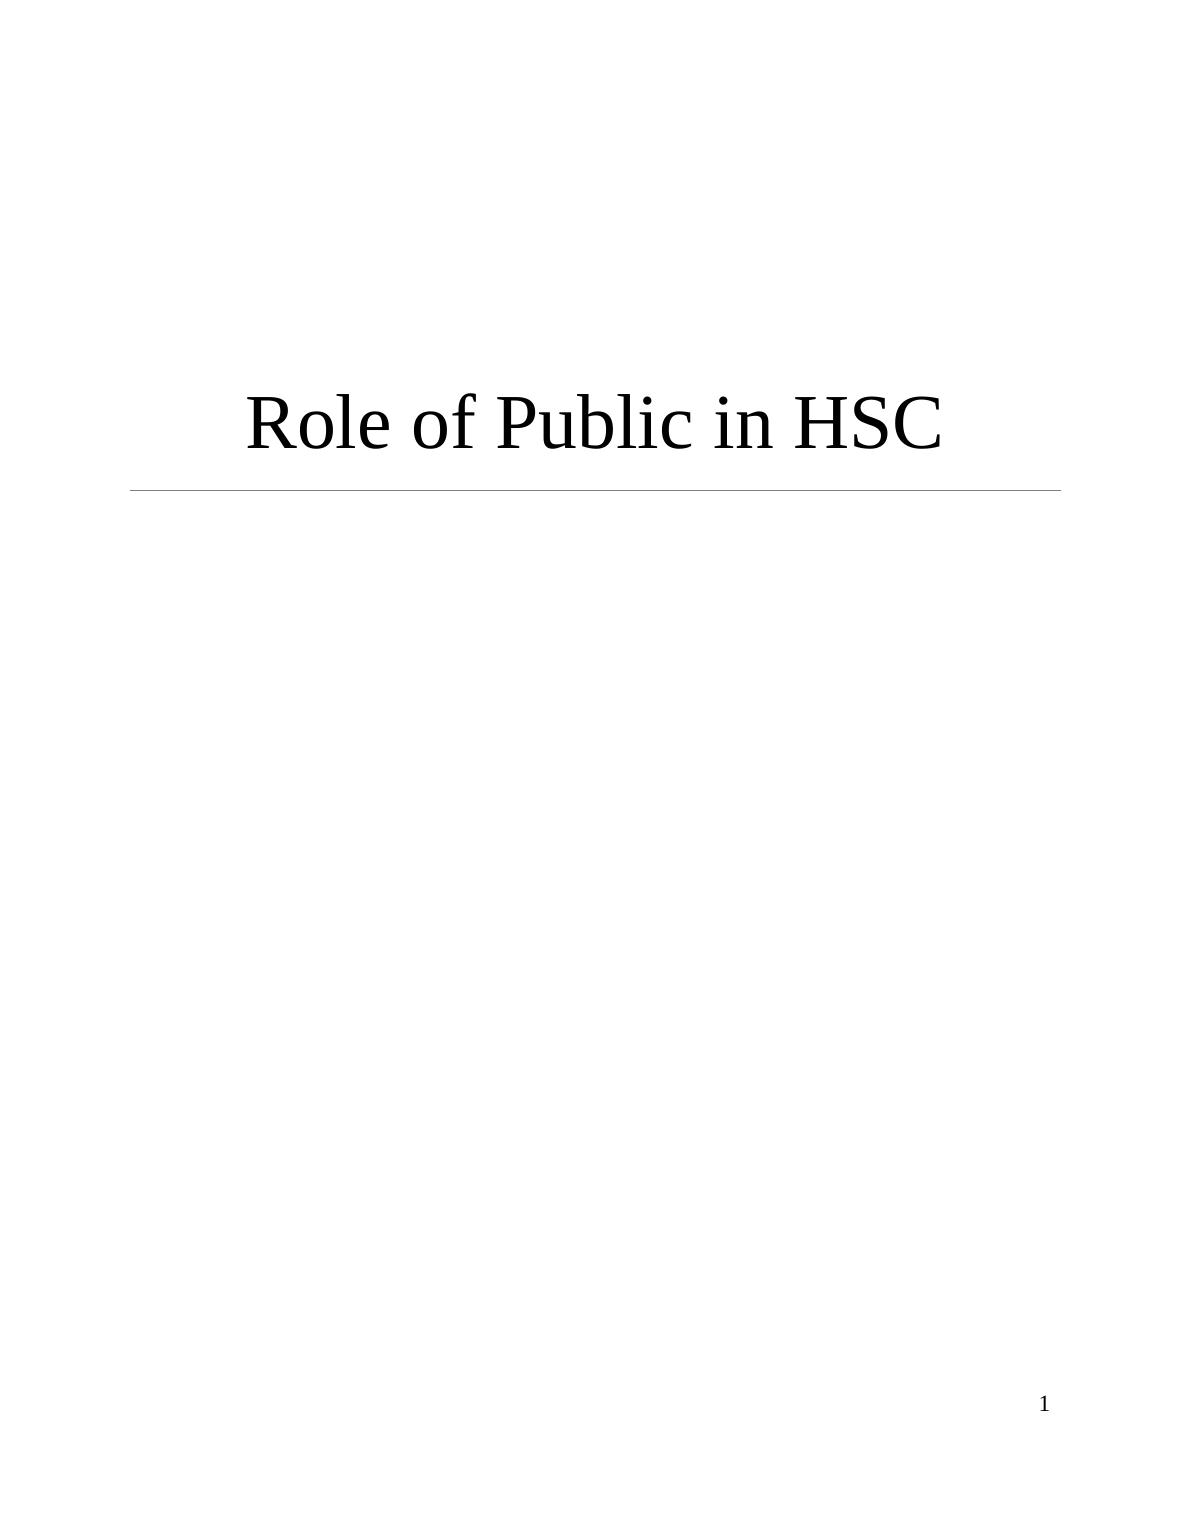 Concepts of Epidemiology: HSC Epidemiology_1